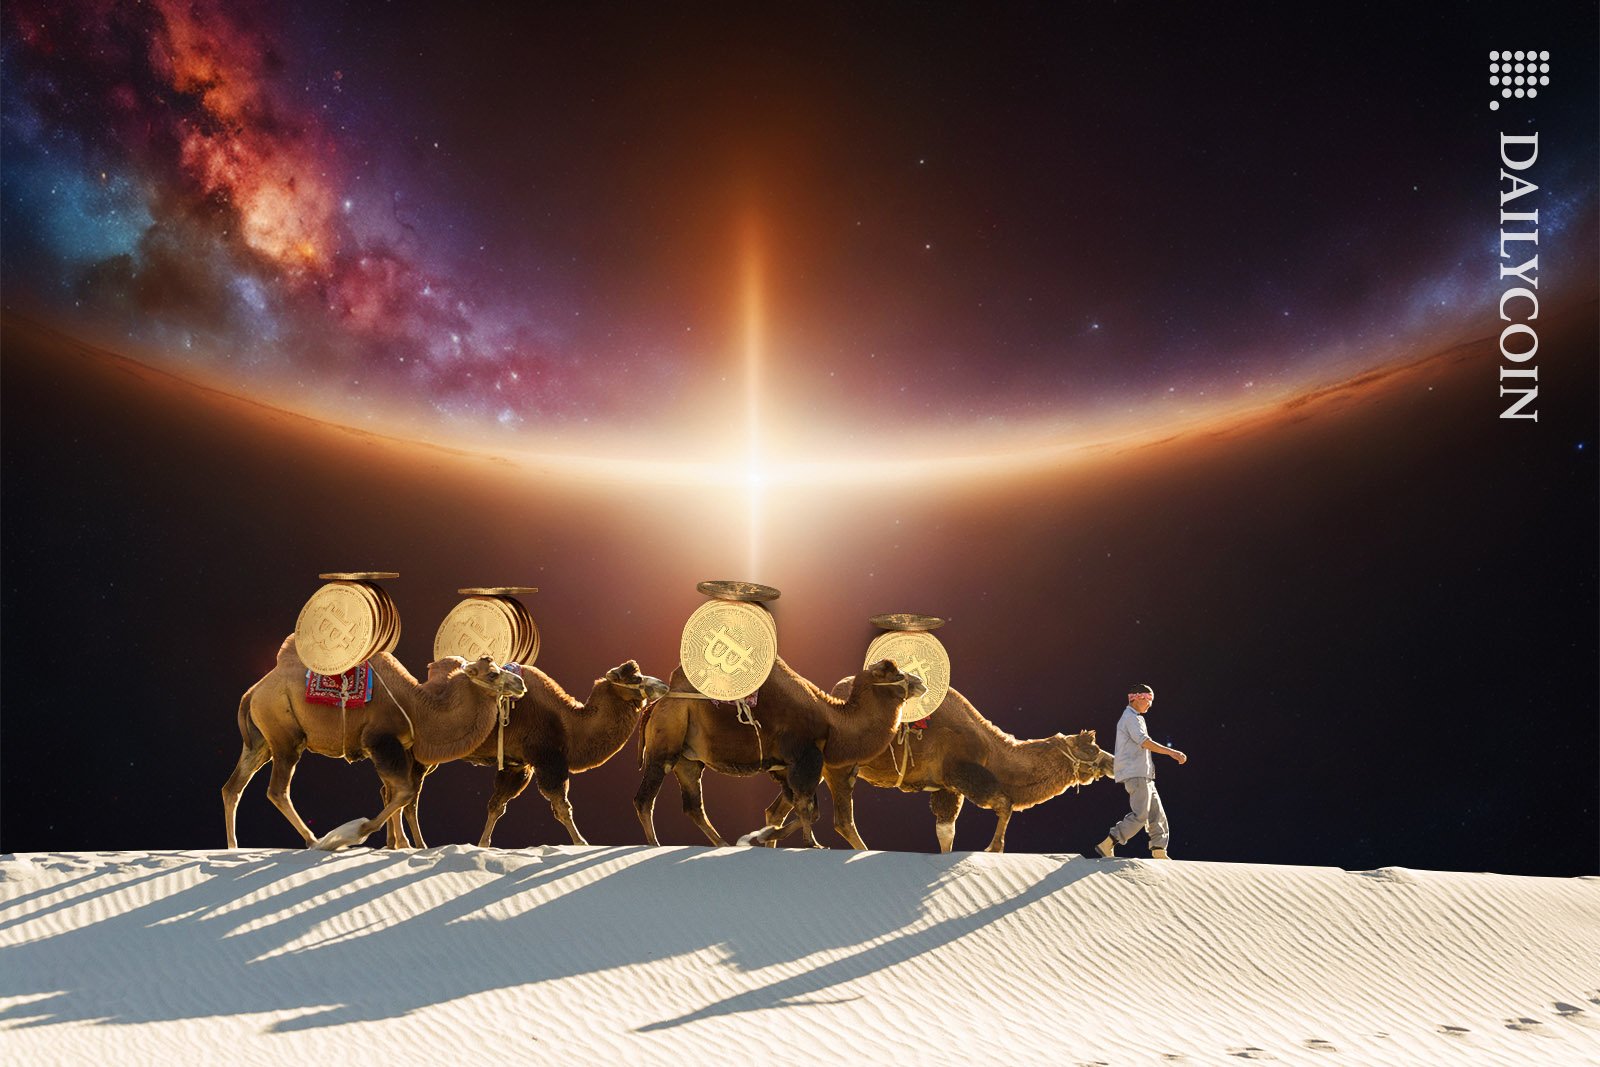 A caravan of camels transporting Bitcoins under an alien sky.